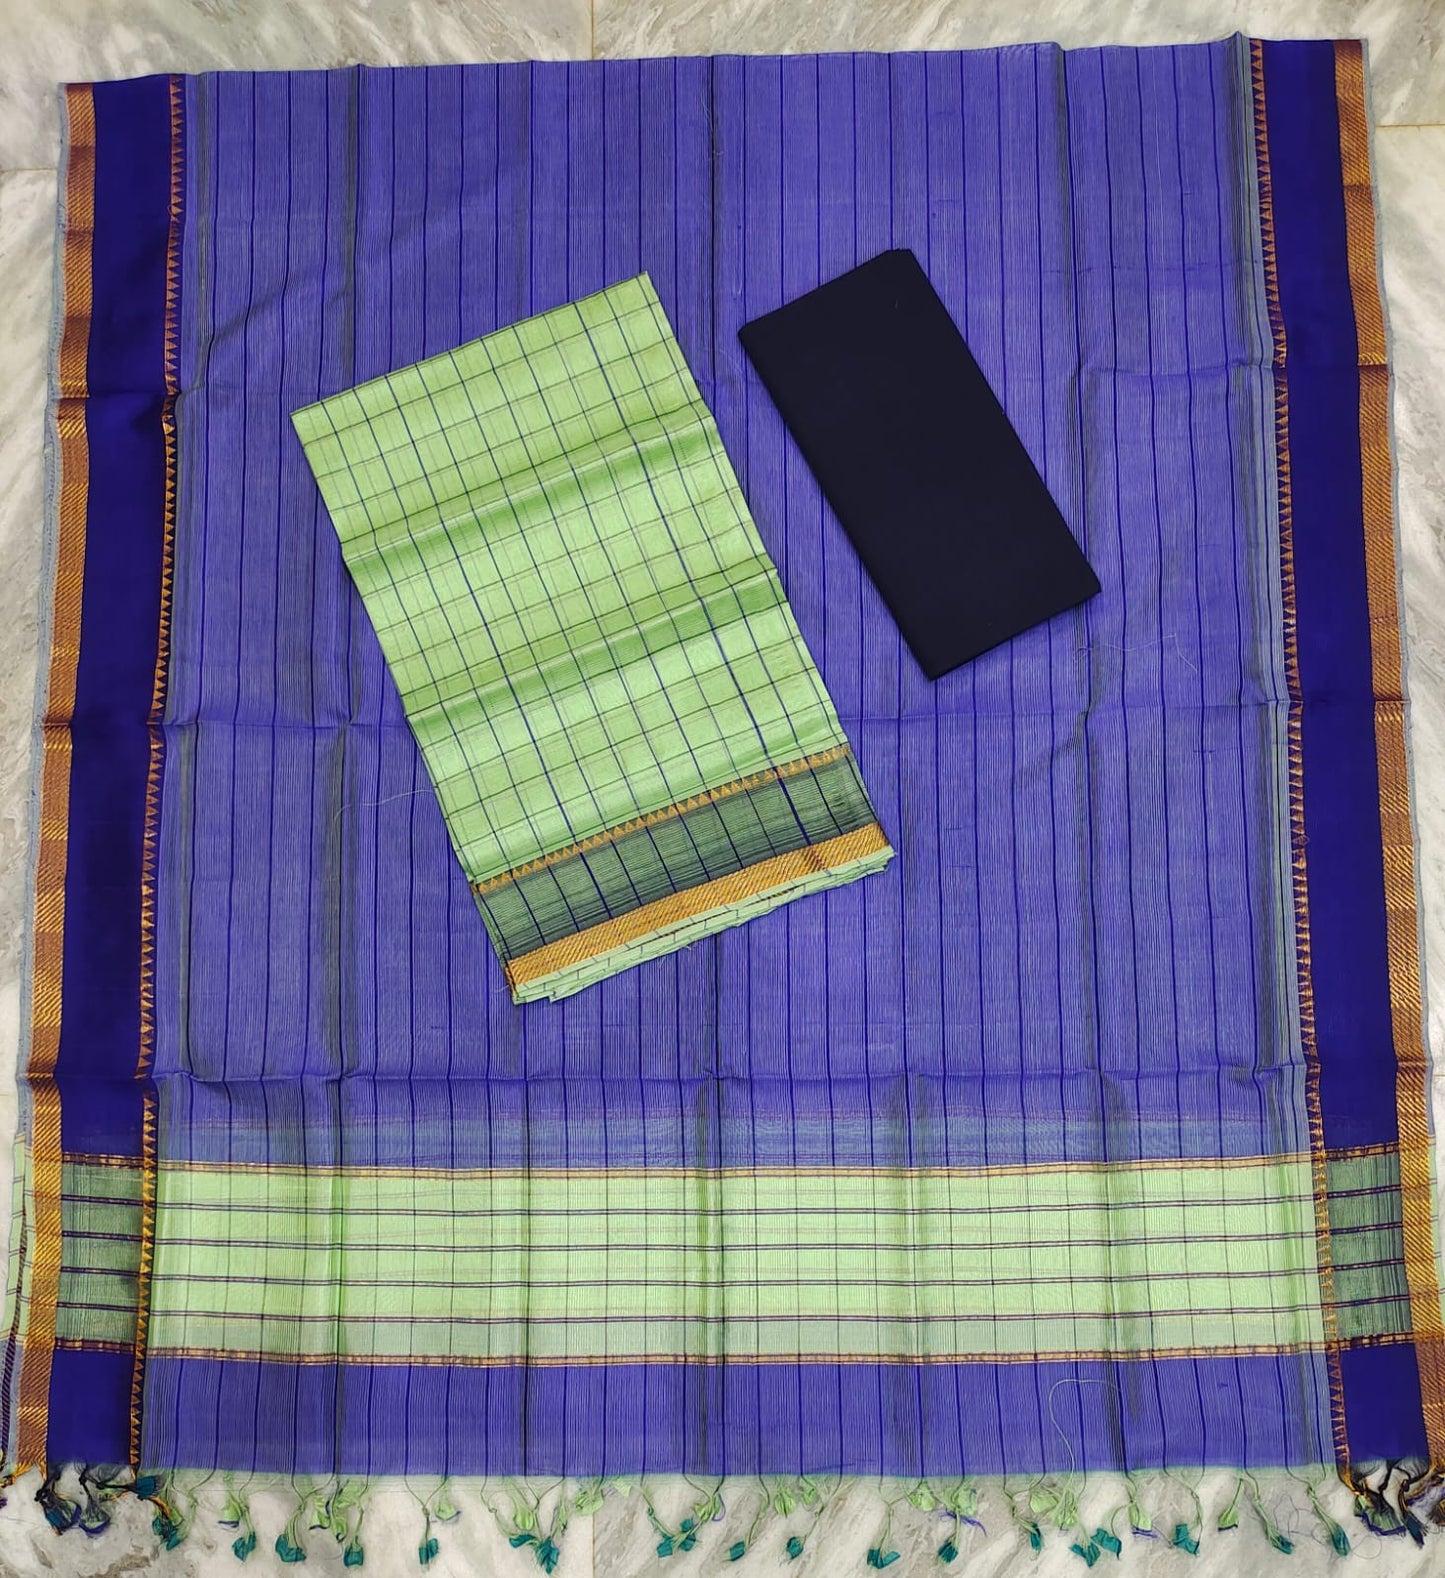 Mangalagiri pattu stripes dress material set (unstitched)